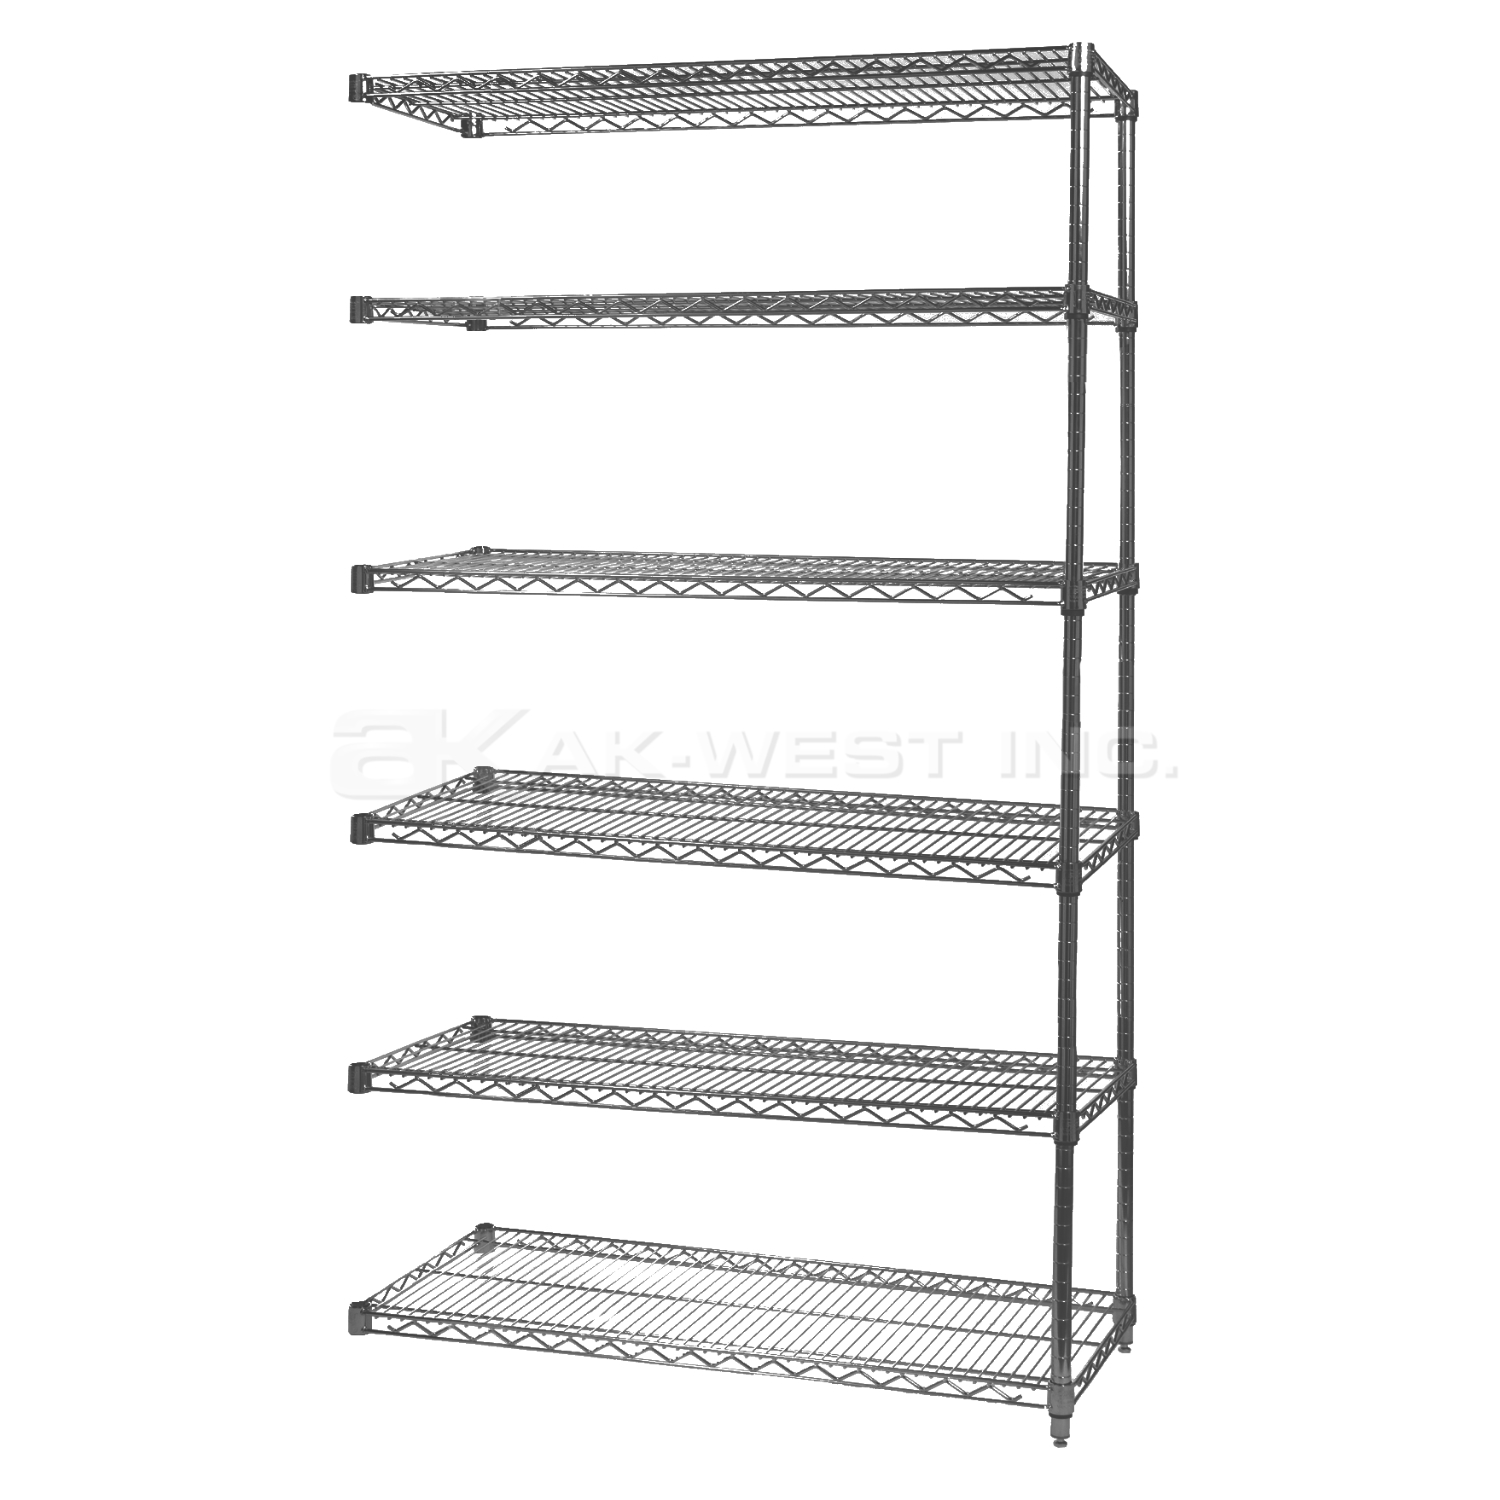 Grey, 24"D x 48"W x 86"H, 6 Shelf, Wire Shelving Adder Kit